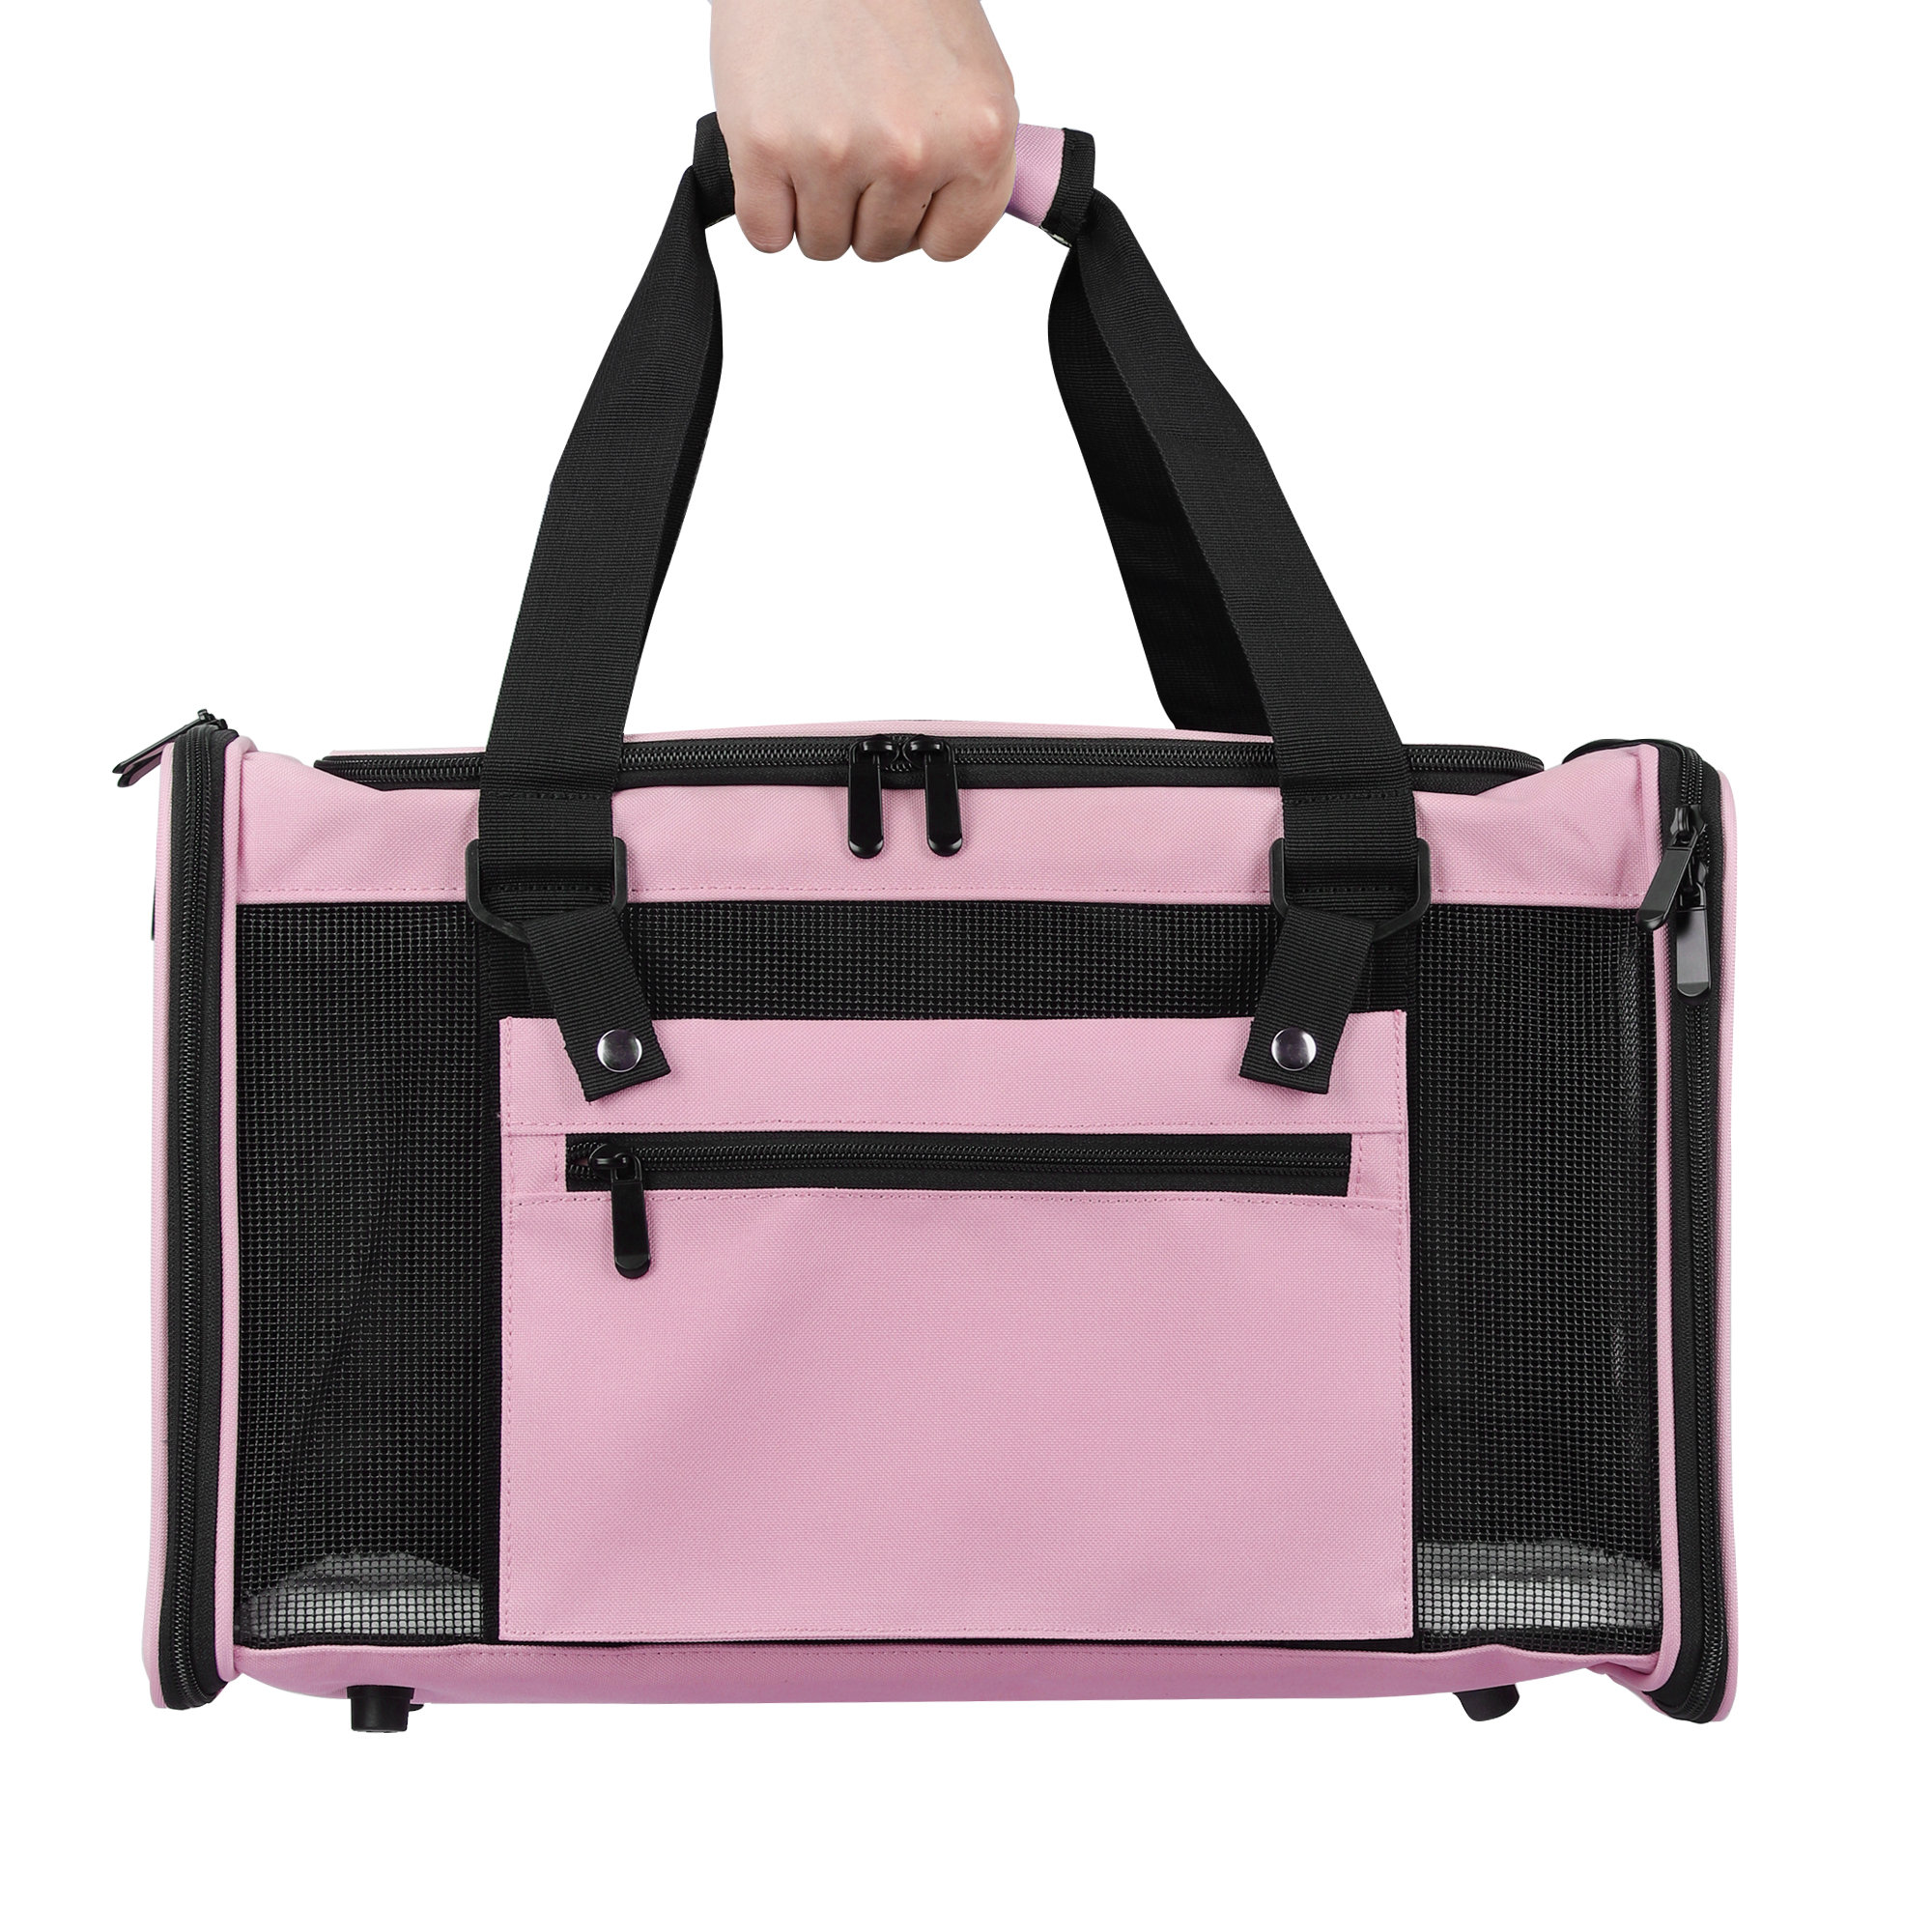  Touchdog Airline Approved Around-The-Globe Passport Designer  Pet Carrier, One Size, Pink : Pet Supplies